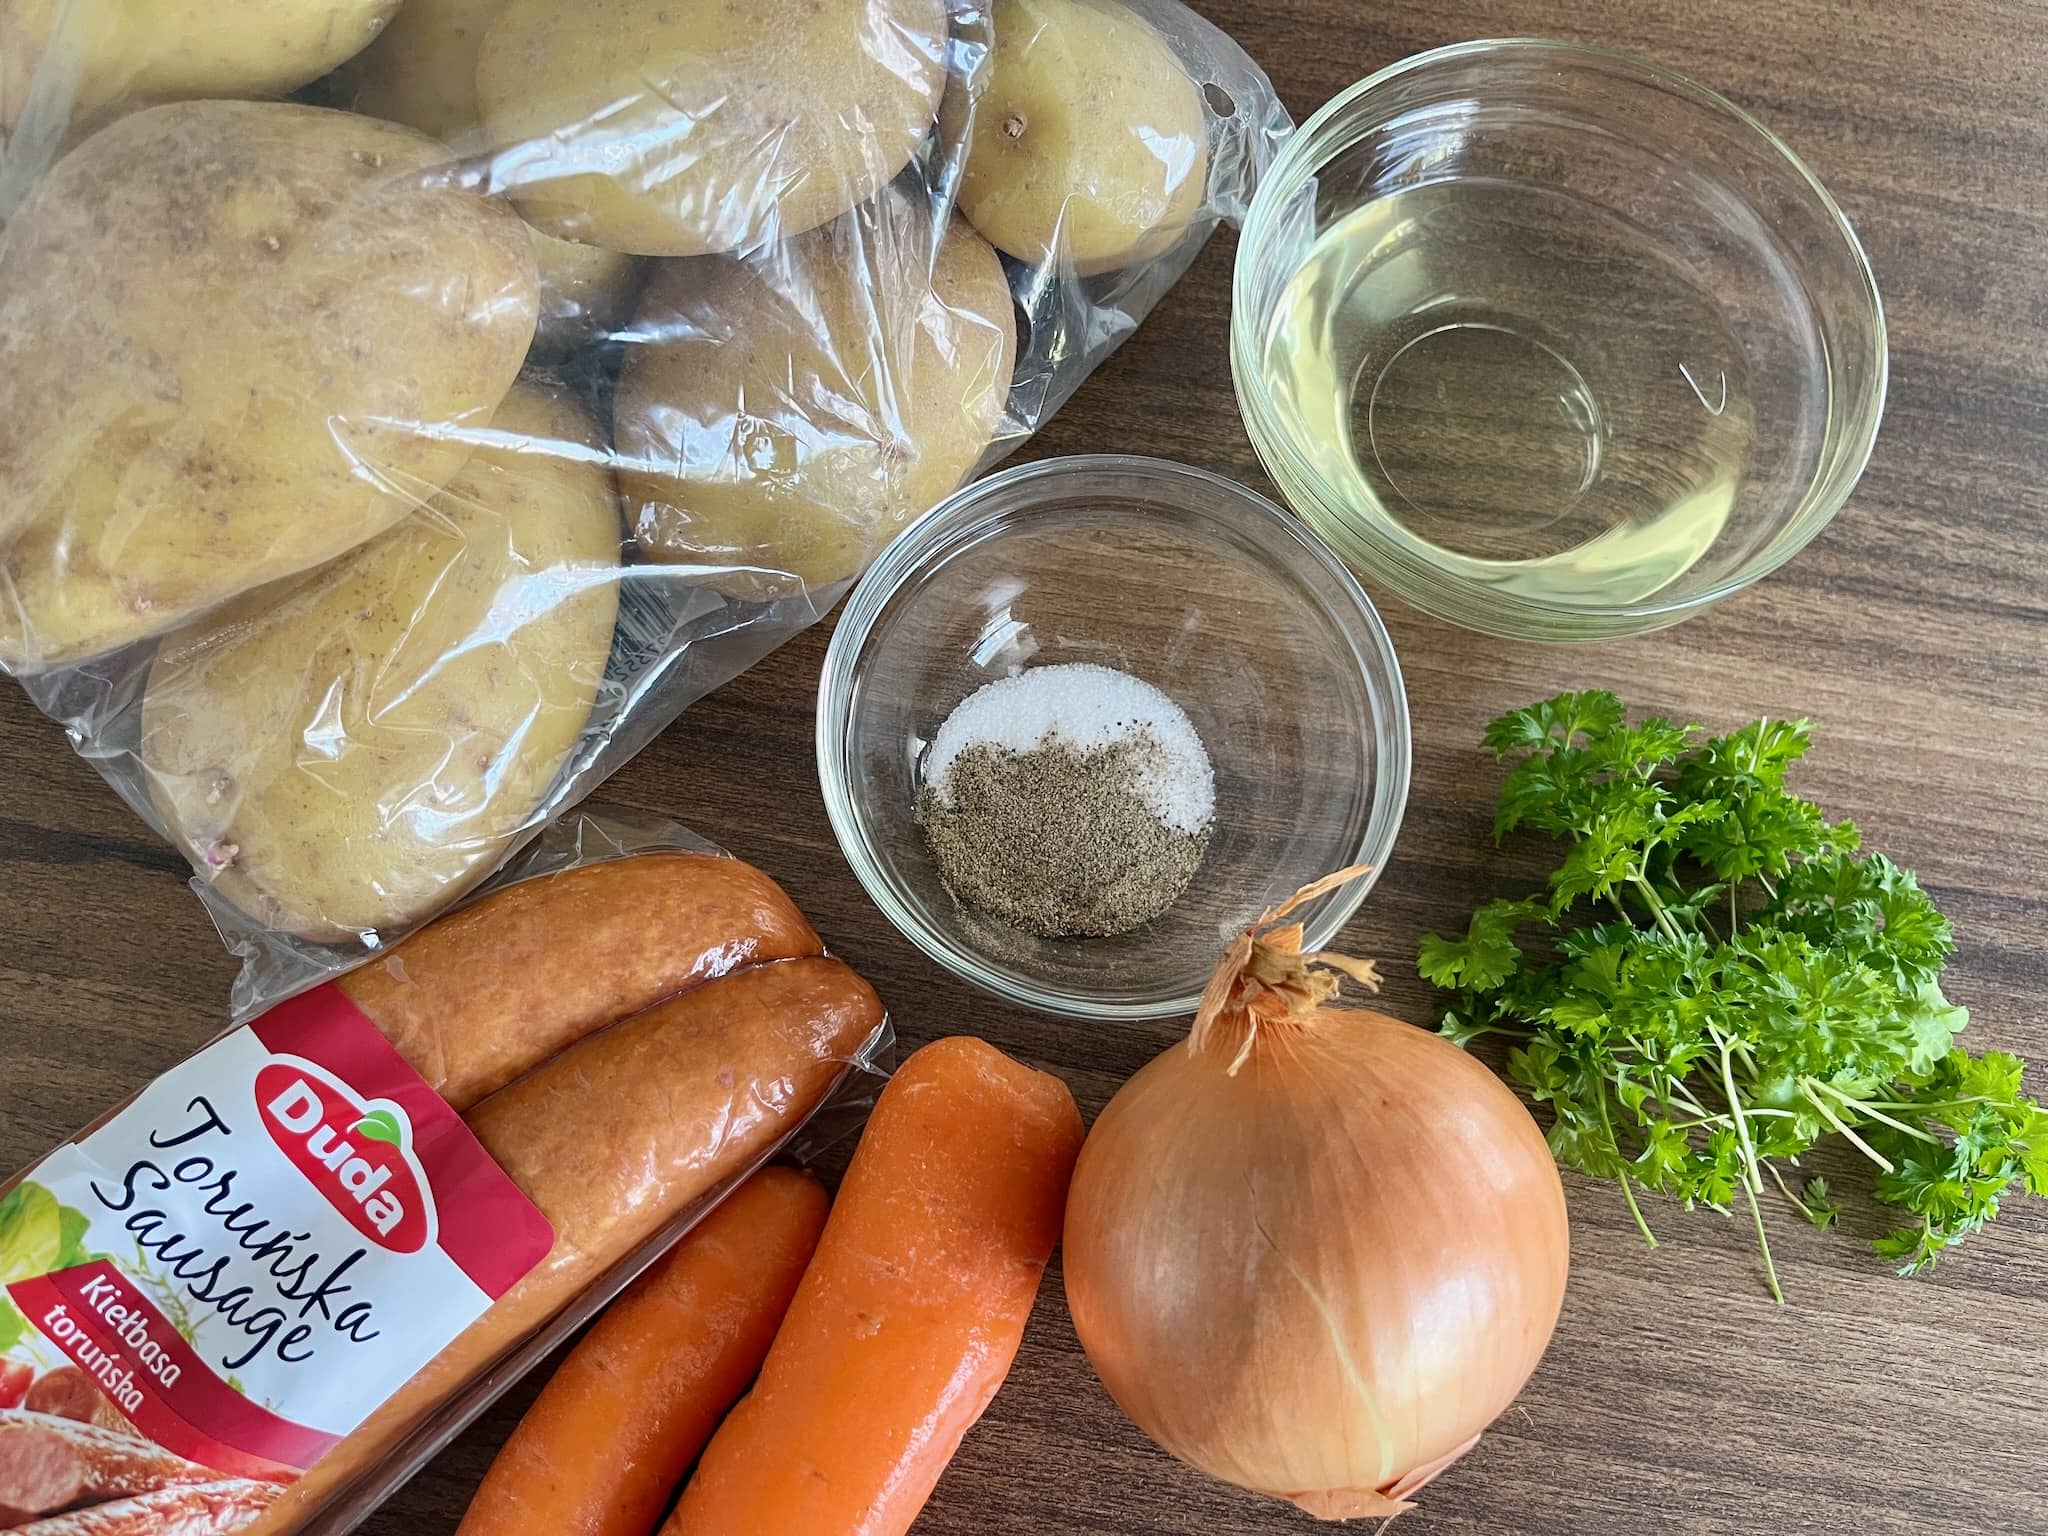 Potatoes, carrots, polish sausage, onion, parsley, salt, pepper and oil